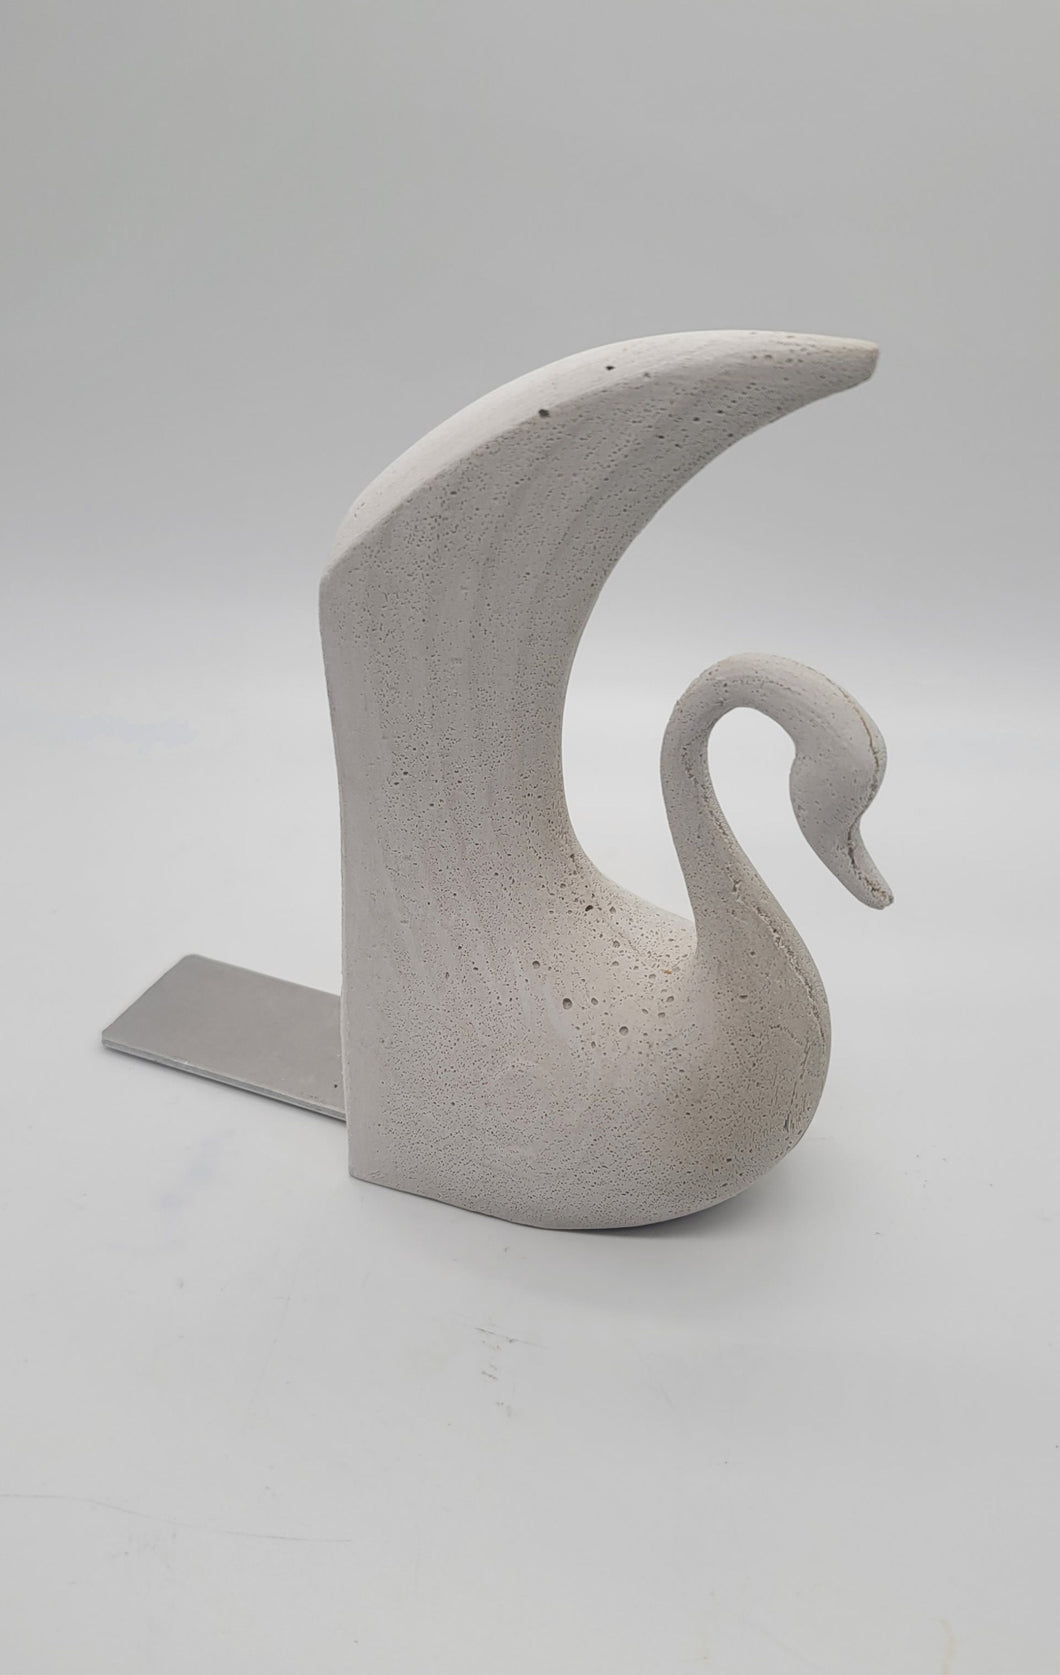 Swan Bookends-Unique Concrete Bookends-Swan Sculpture Statue-Home Decor Gift - Shaping Ideas 